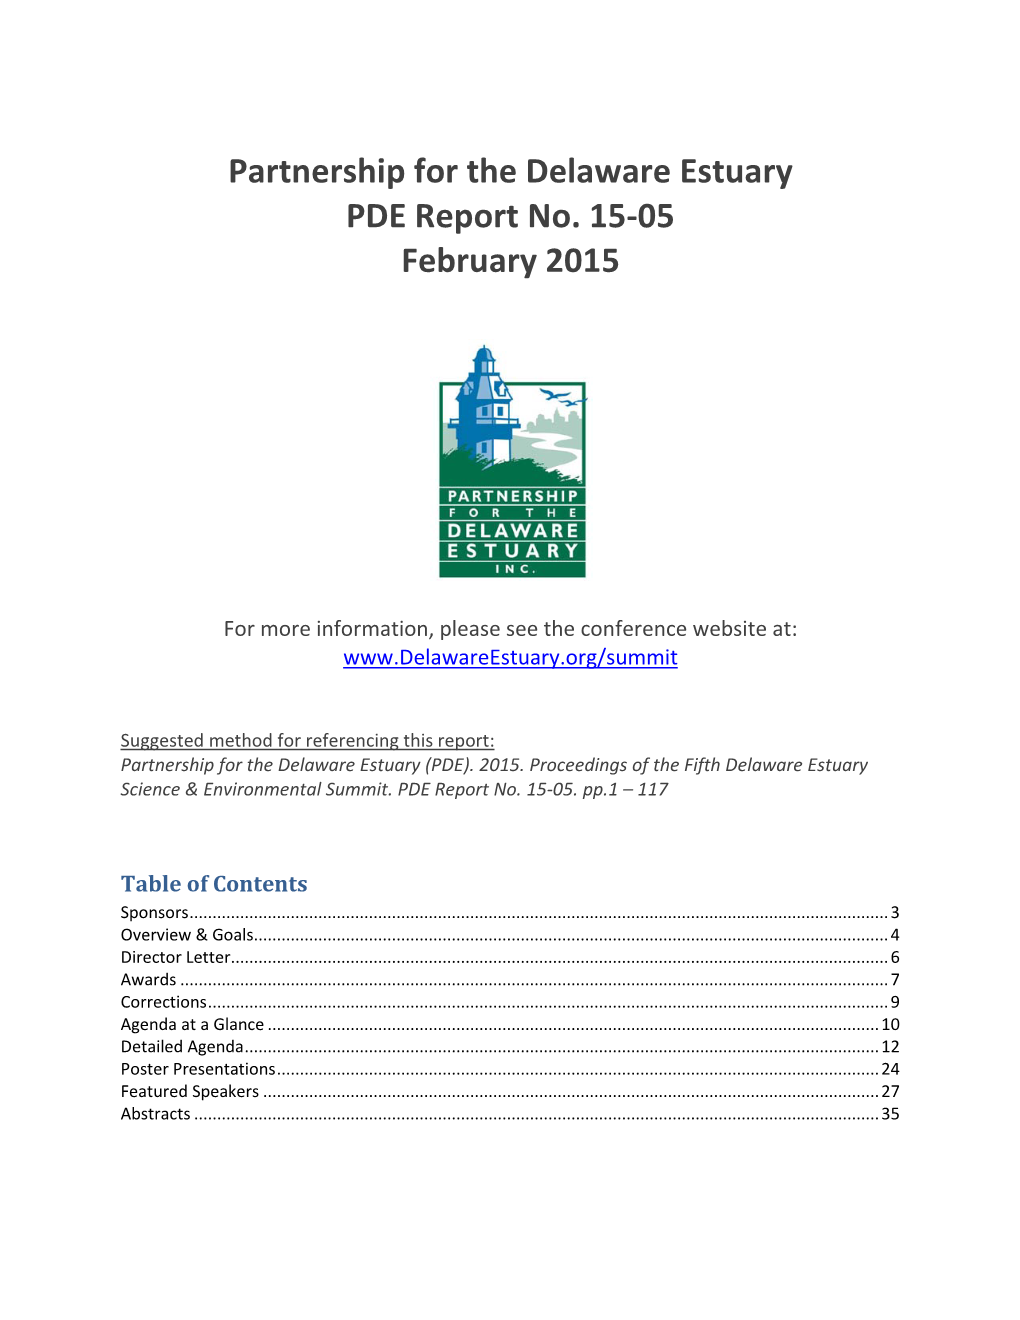 Partnership for the Delaware Estuary PDE Report No. 15-05 February 2015